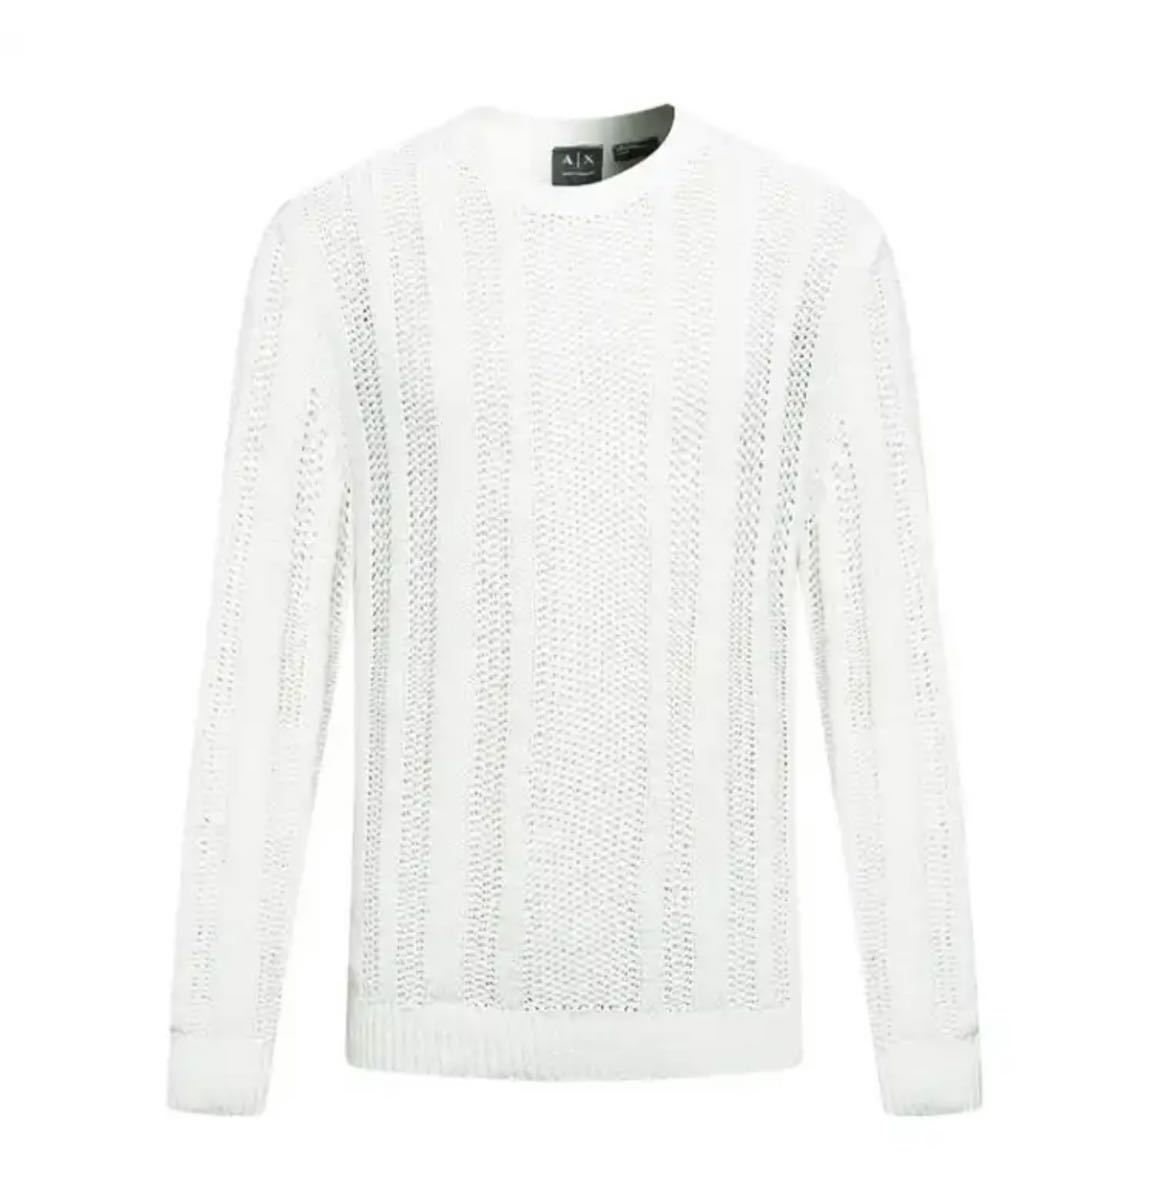 『ARMANI』 / アルマーニ 白 ホワイト ニット セーター ワンポイント シンプル ロゴ XSサイズ 新品未使用品